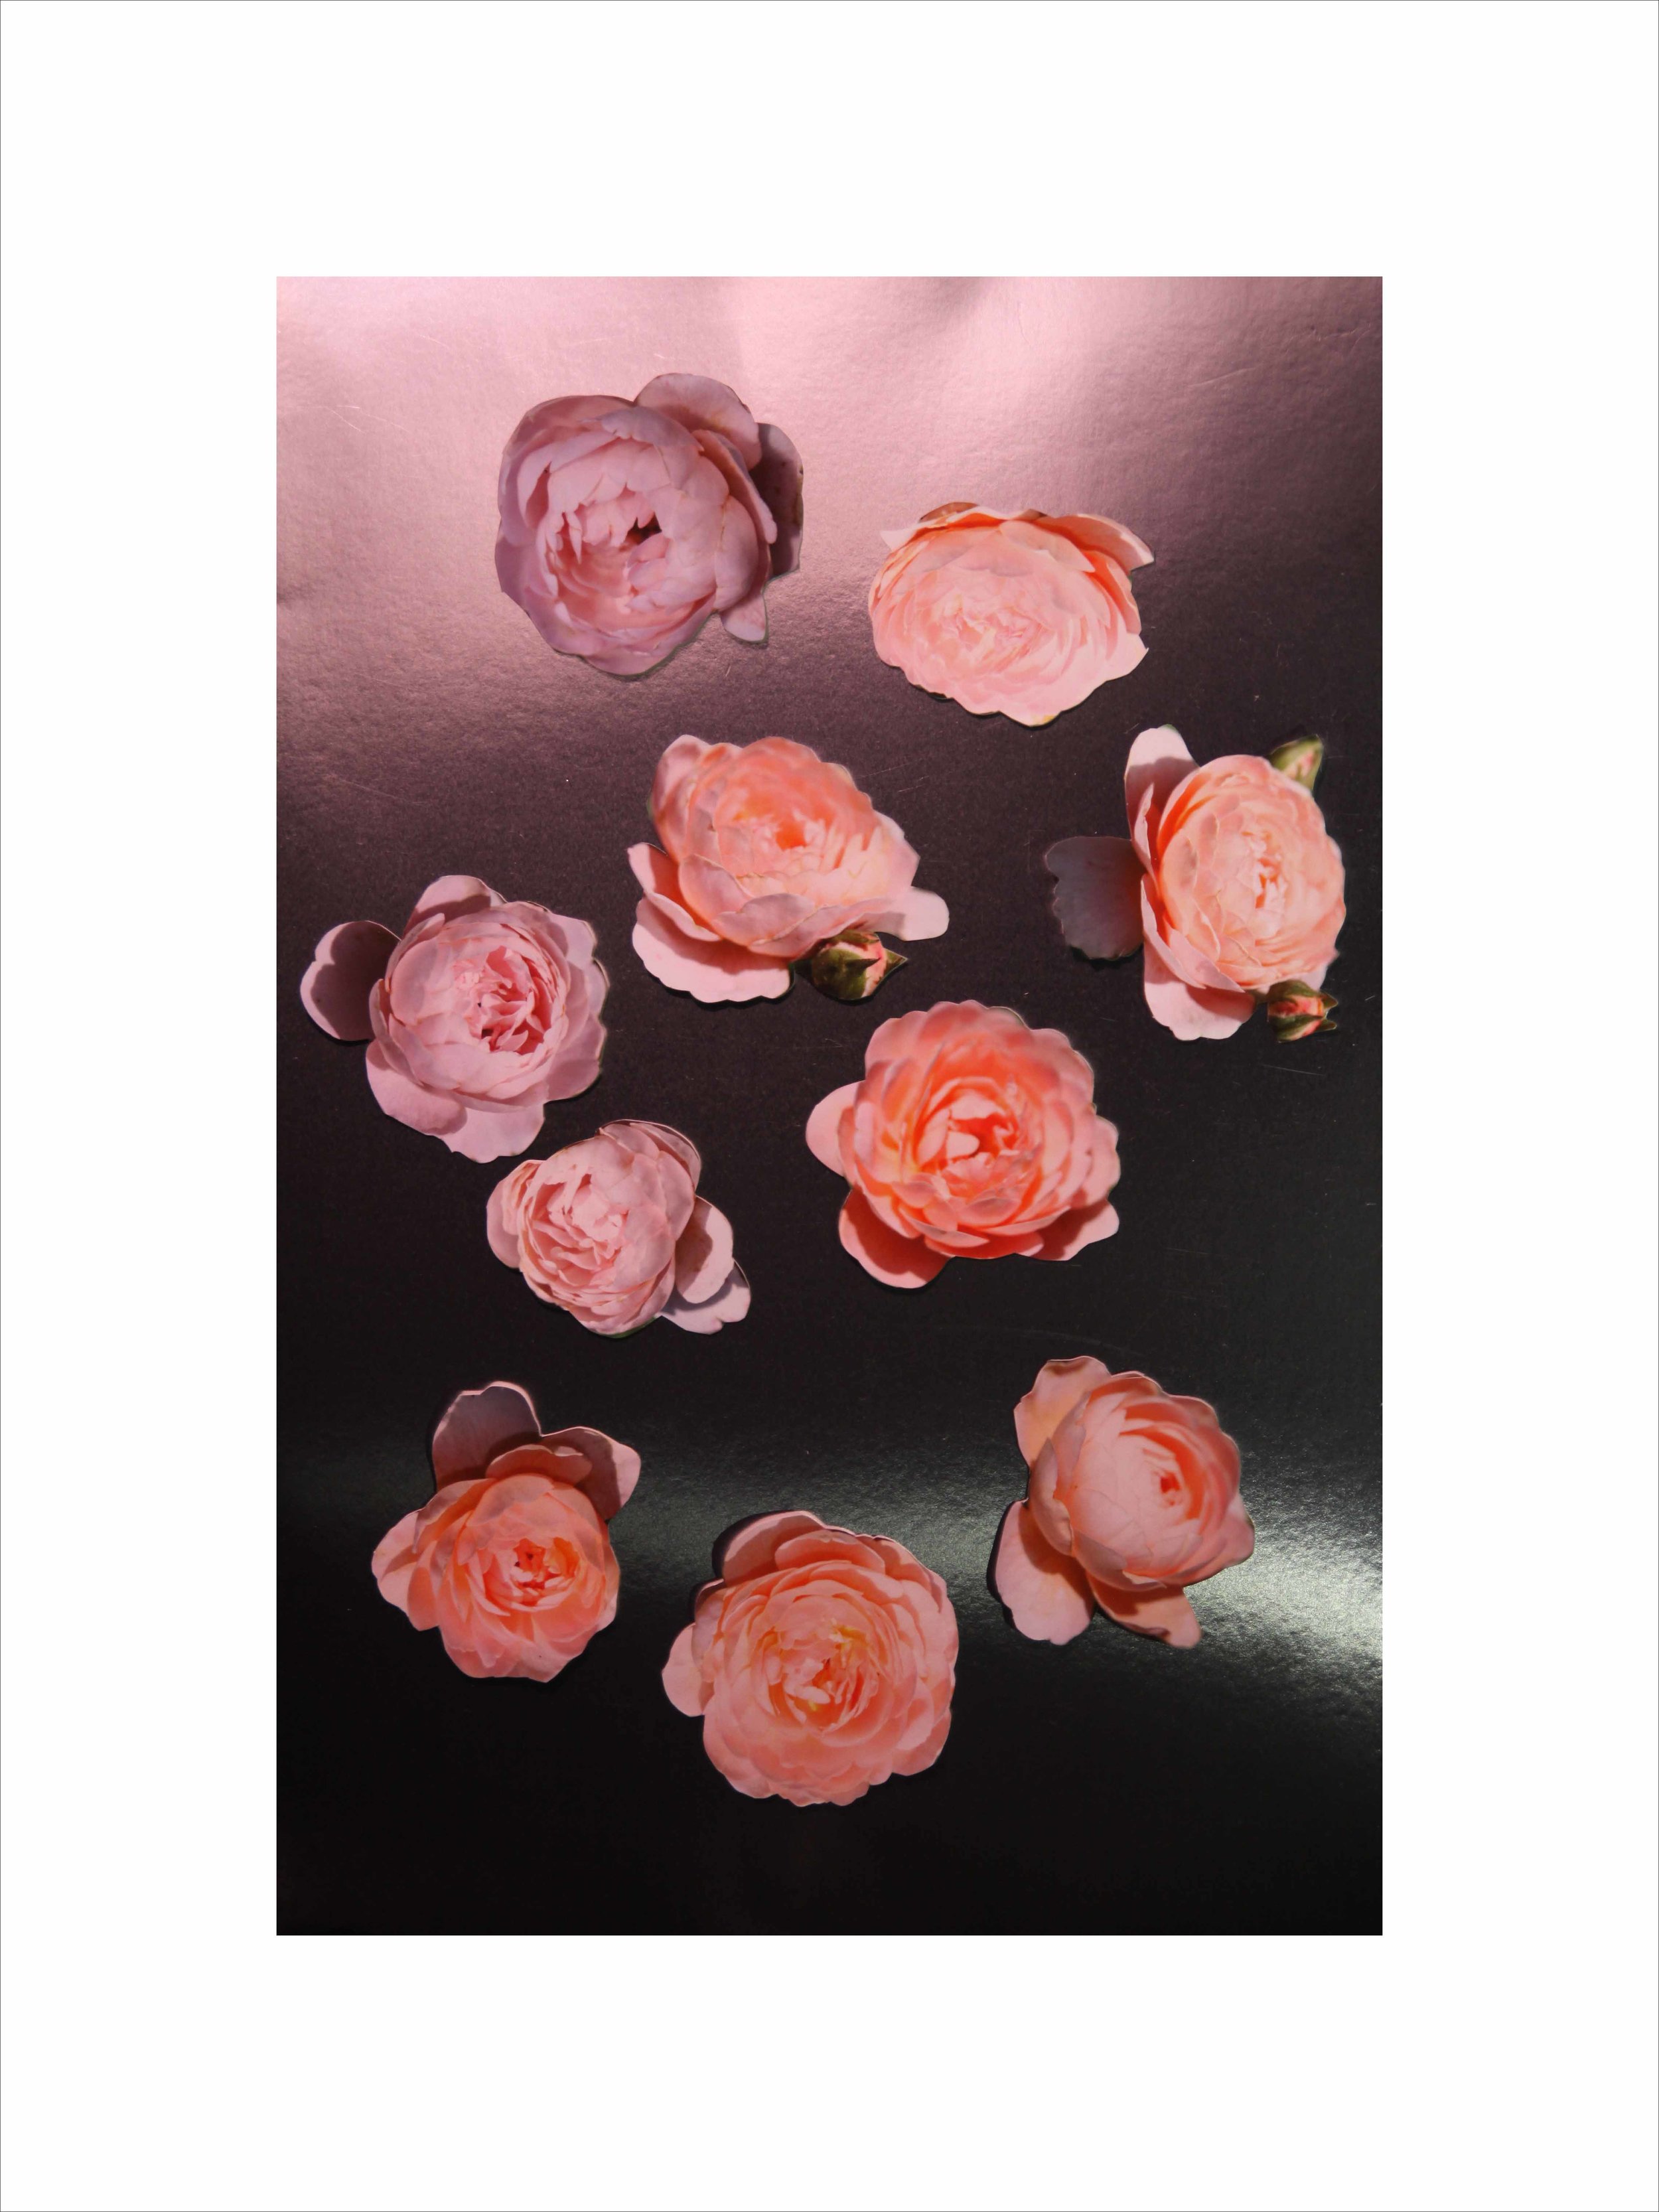    Queen of Sweden Roses I,   2019  Digital photography  32 x 24 in. 